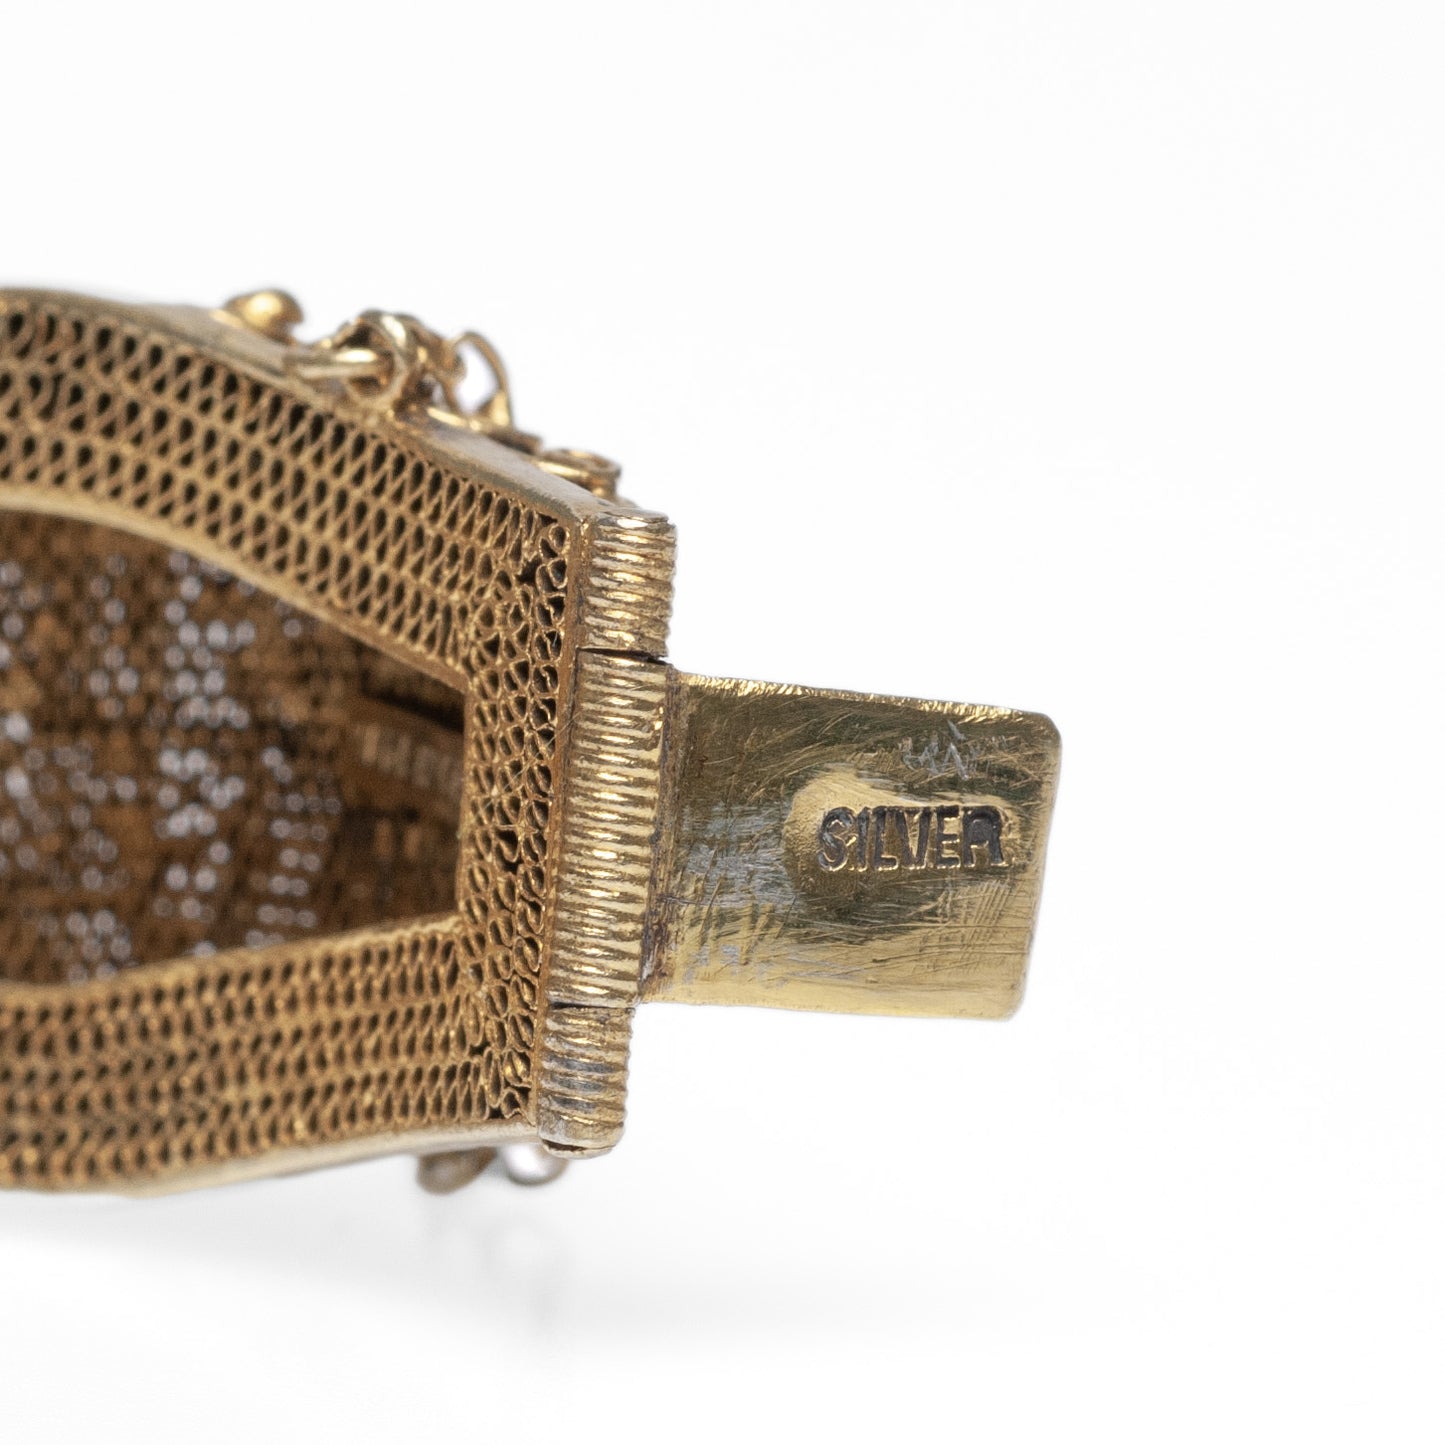 Chinese Silver Gilt & Carnelian Bracelet Filigree Design Vintage Republican  (Code A458)